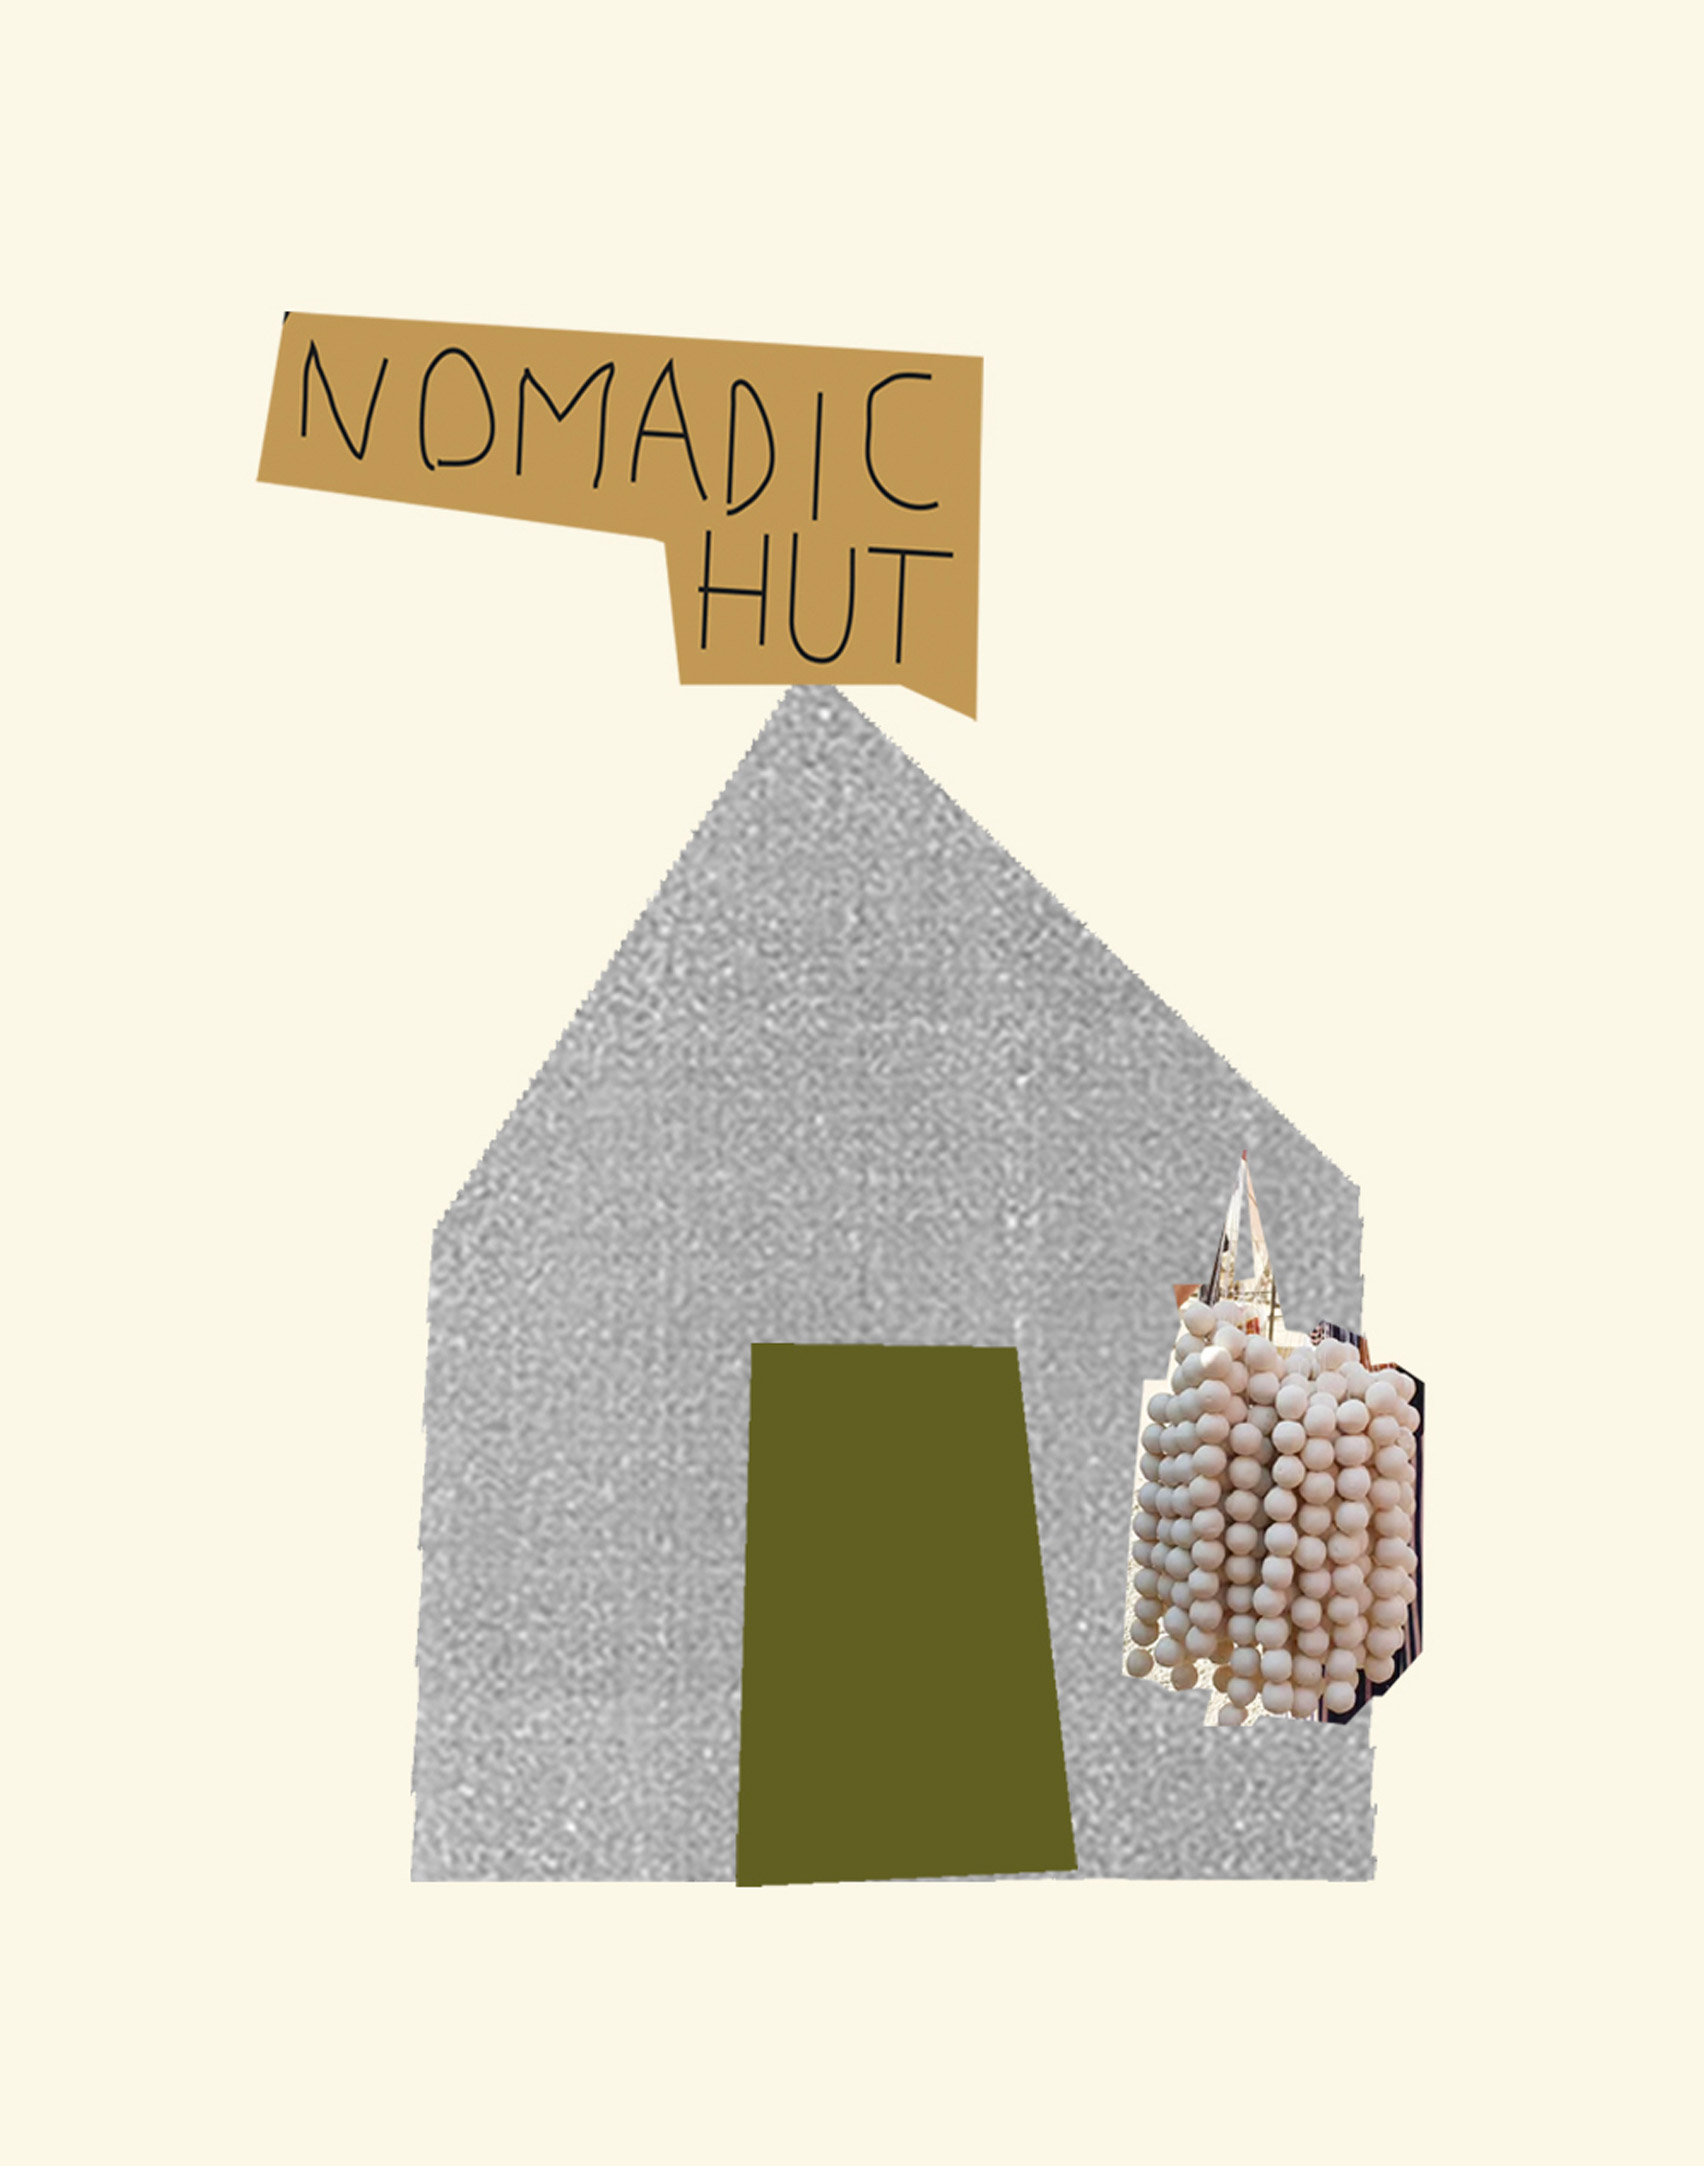 The Nomadic Hut